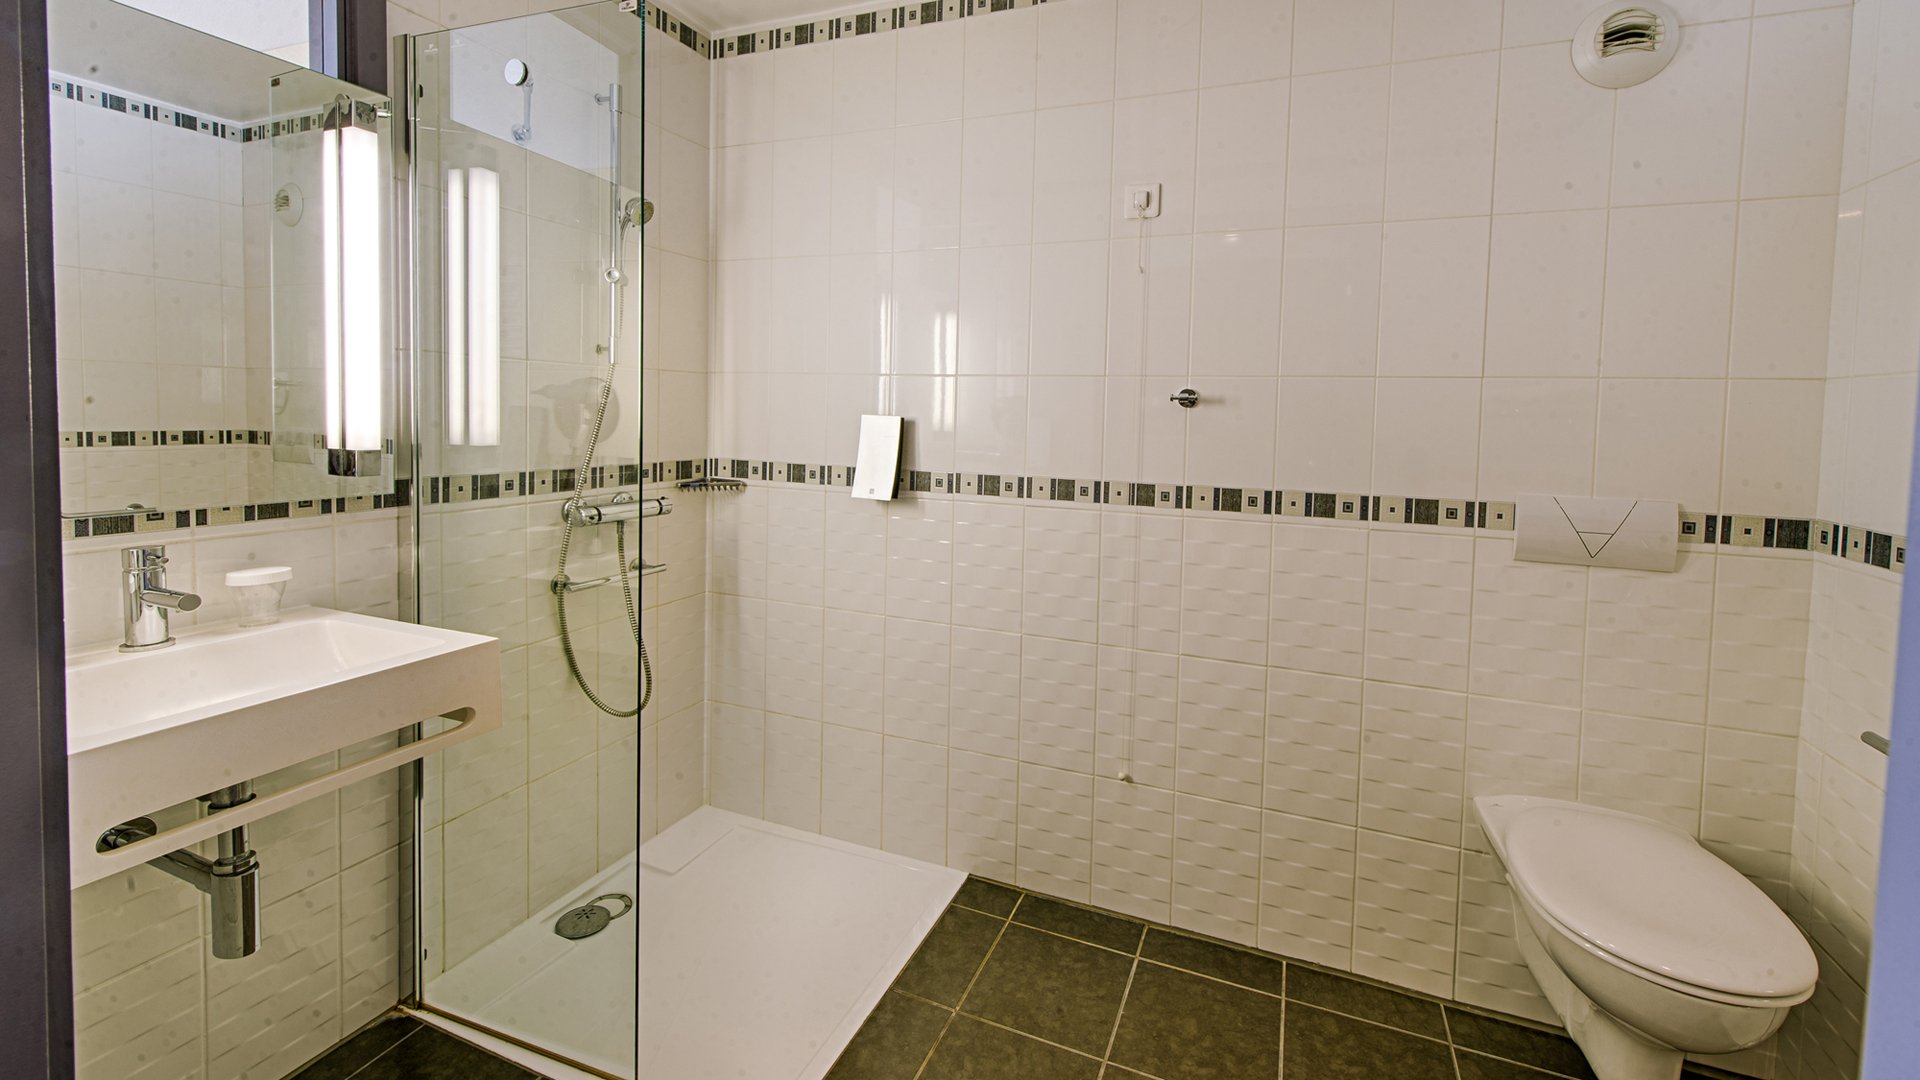 7 Hotel & Spa Chambre PMR salle de bain avec douche accès PMR